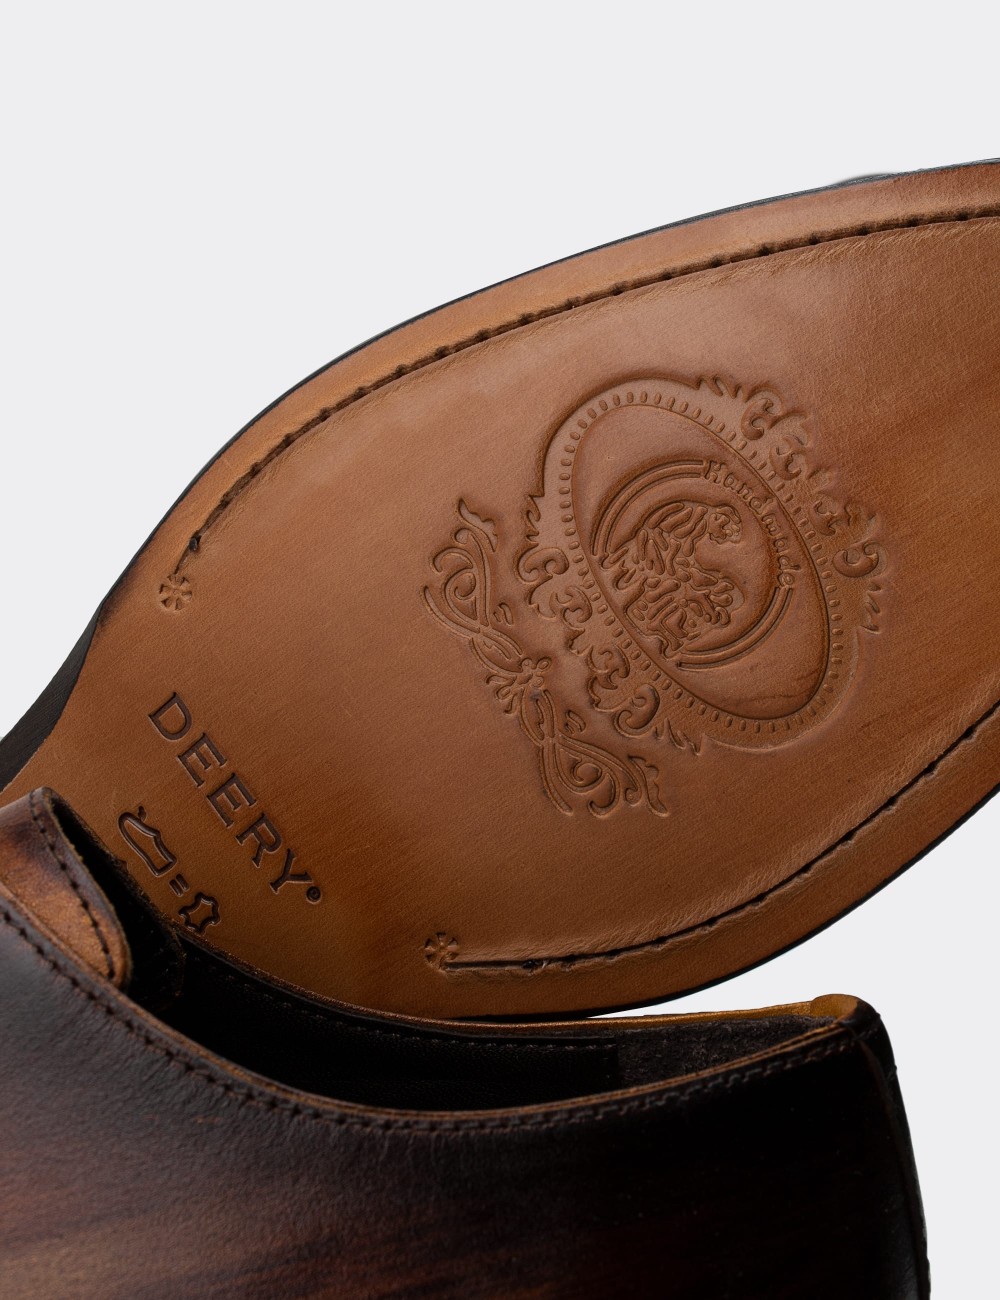 Tan  Leather Classic Shoes - 01830MSRIK01